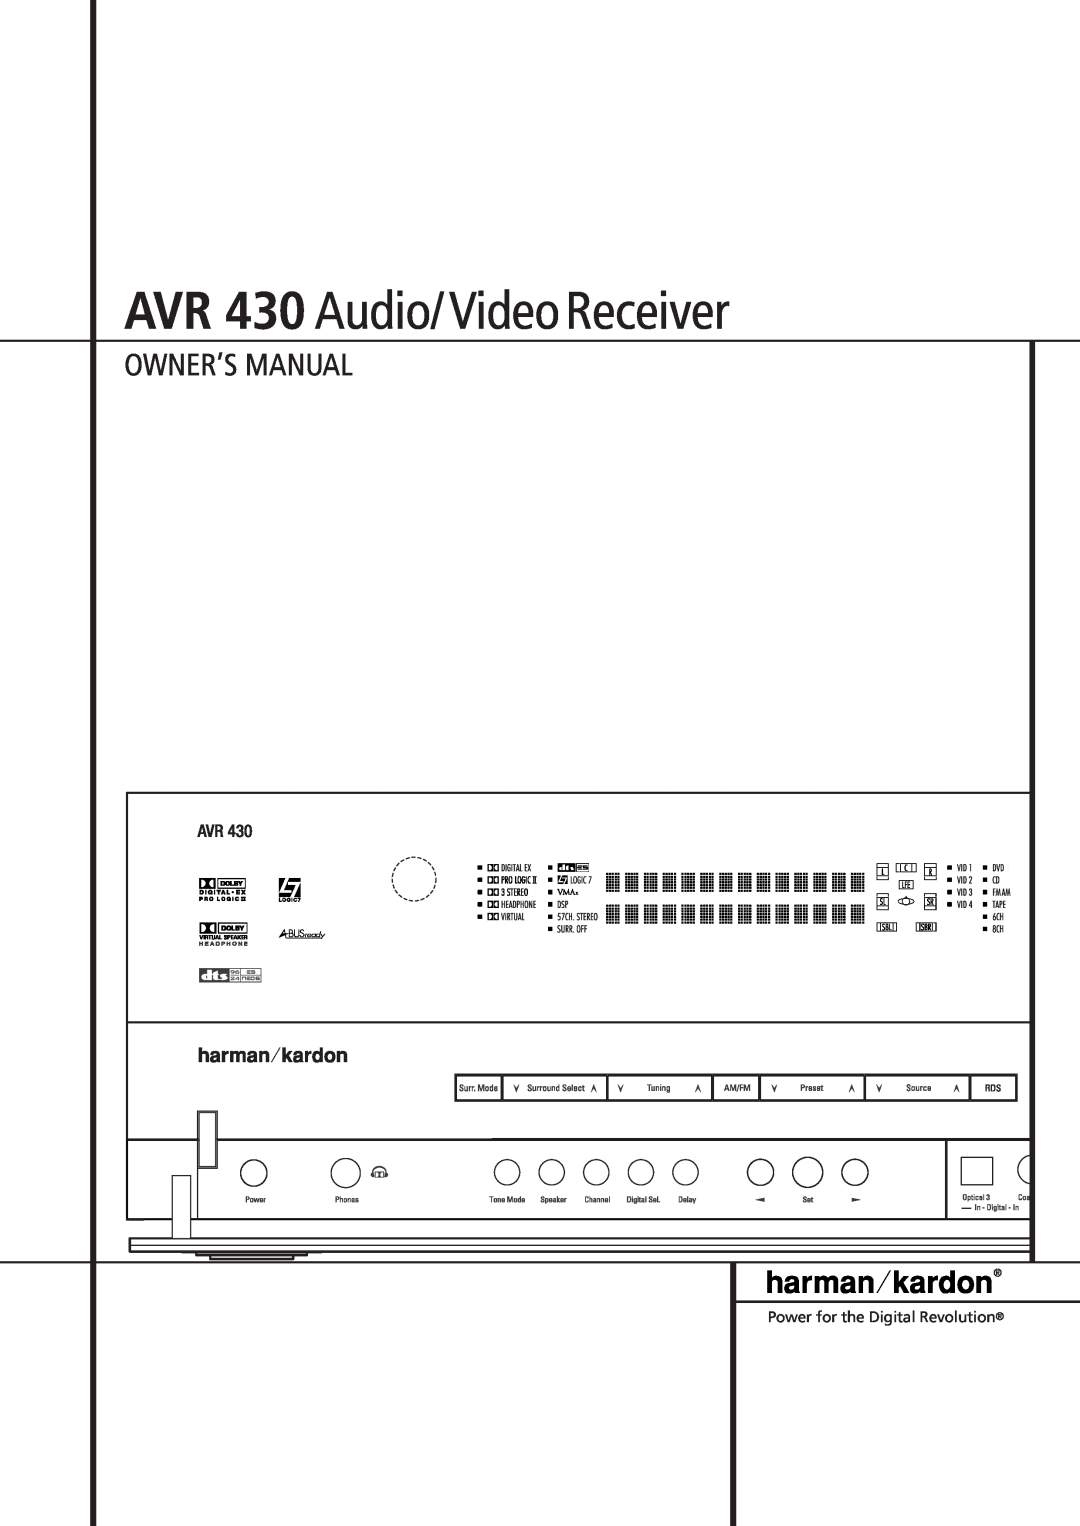 Harman-Kardon owner manual AVR 430 Audio/ Video Receiver, Owner’S Manual 